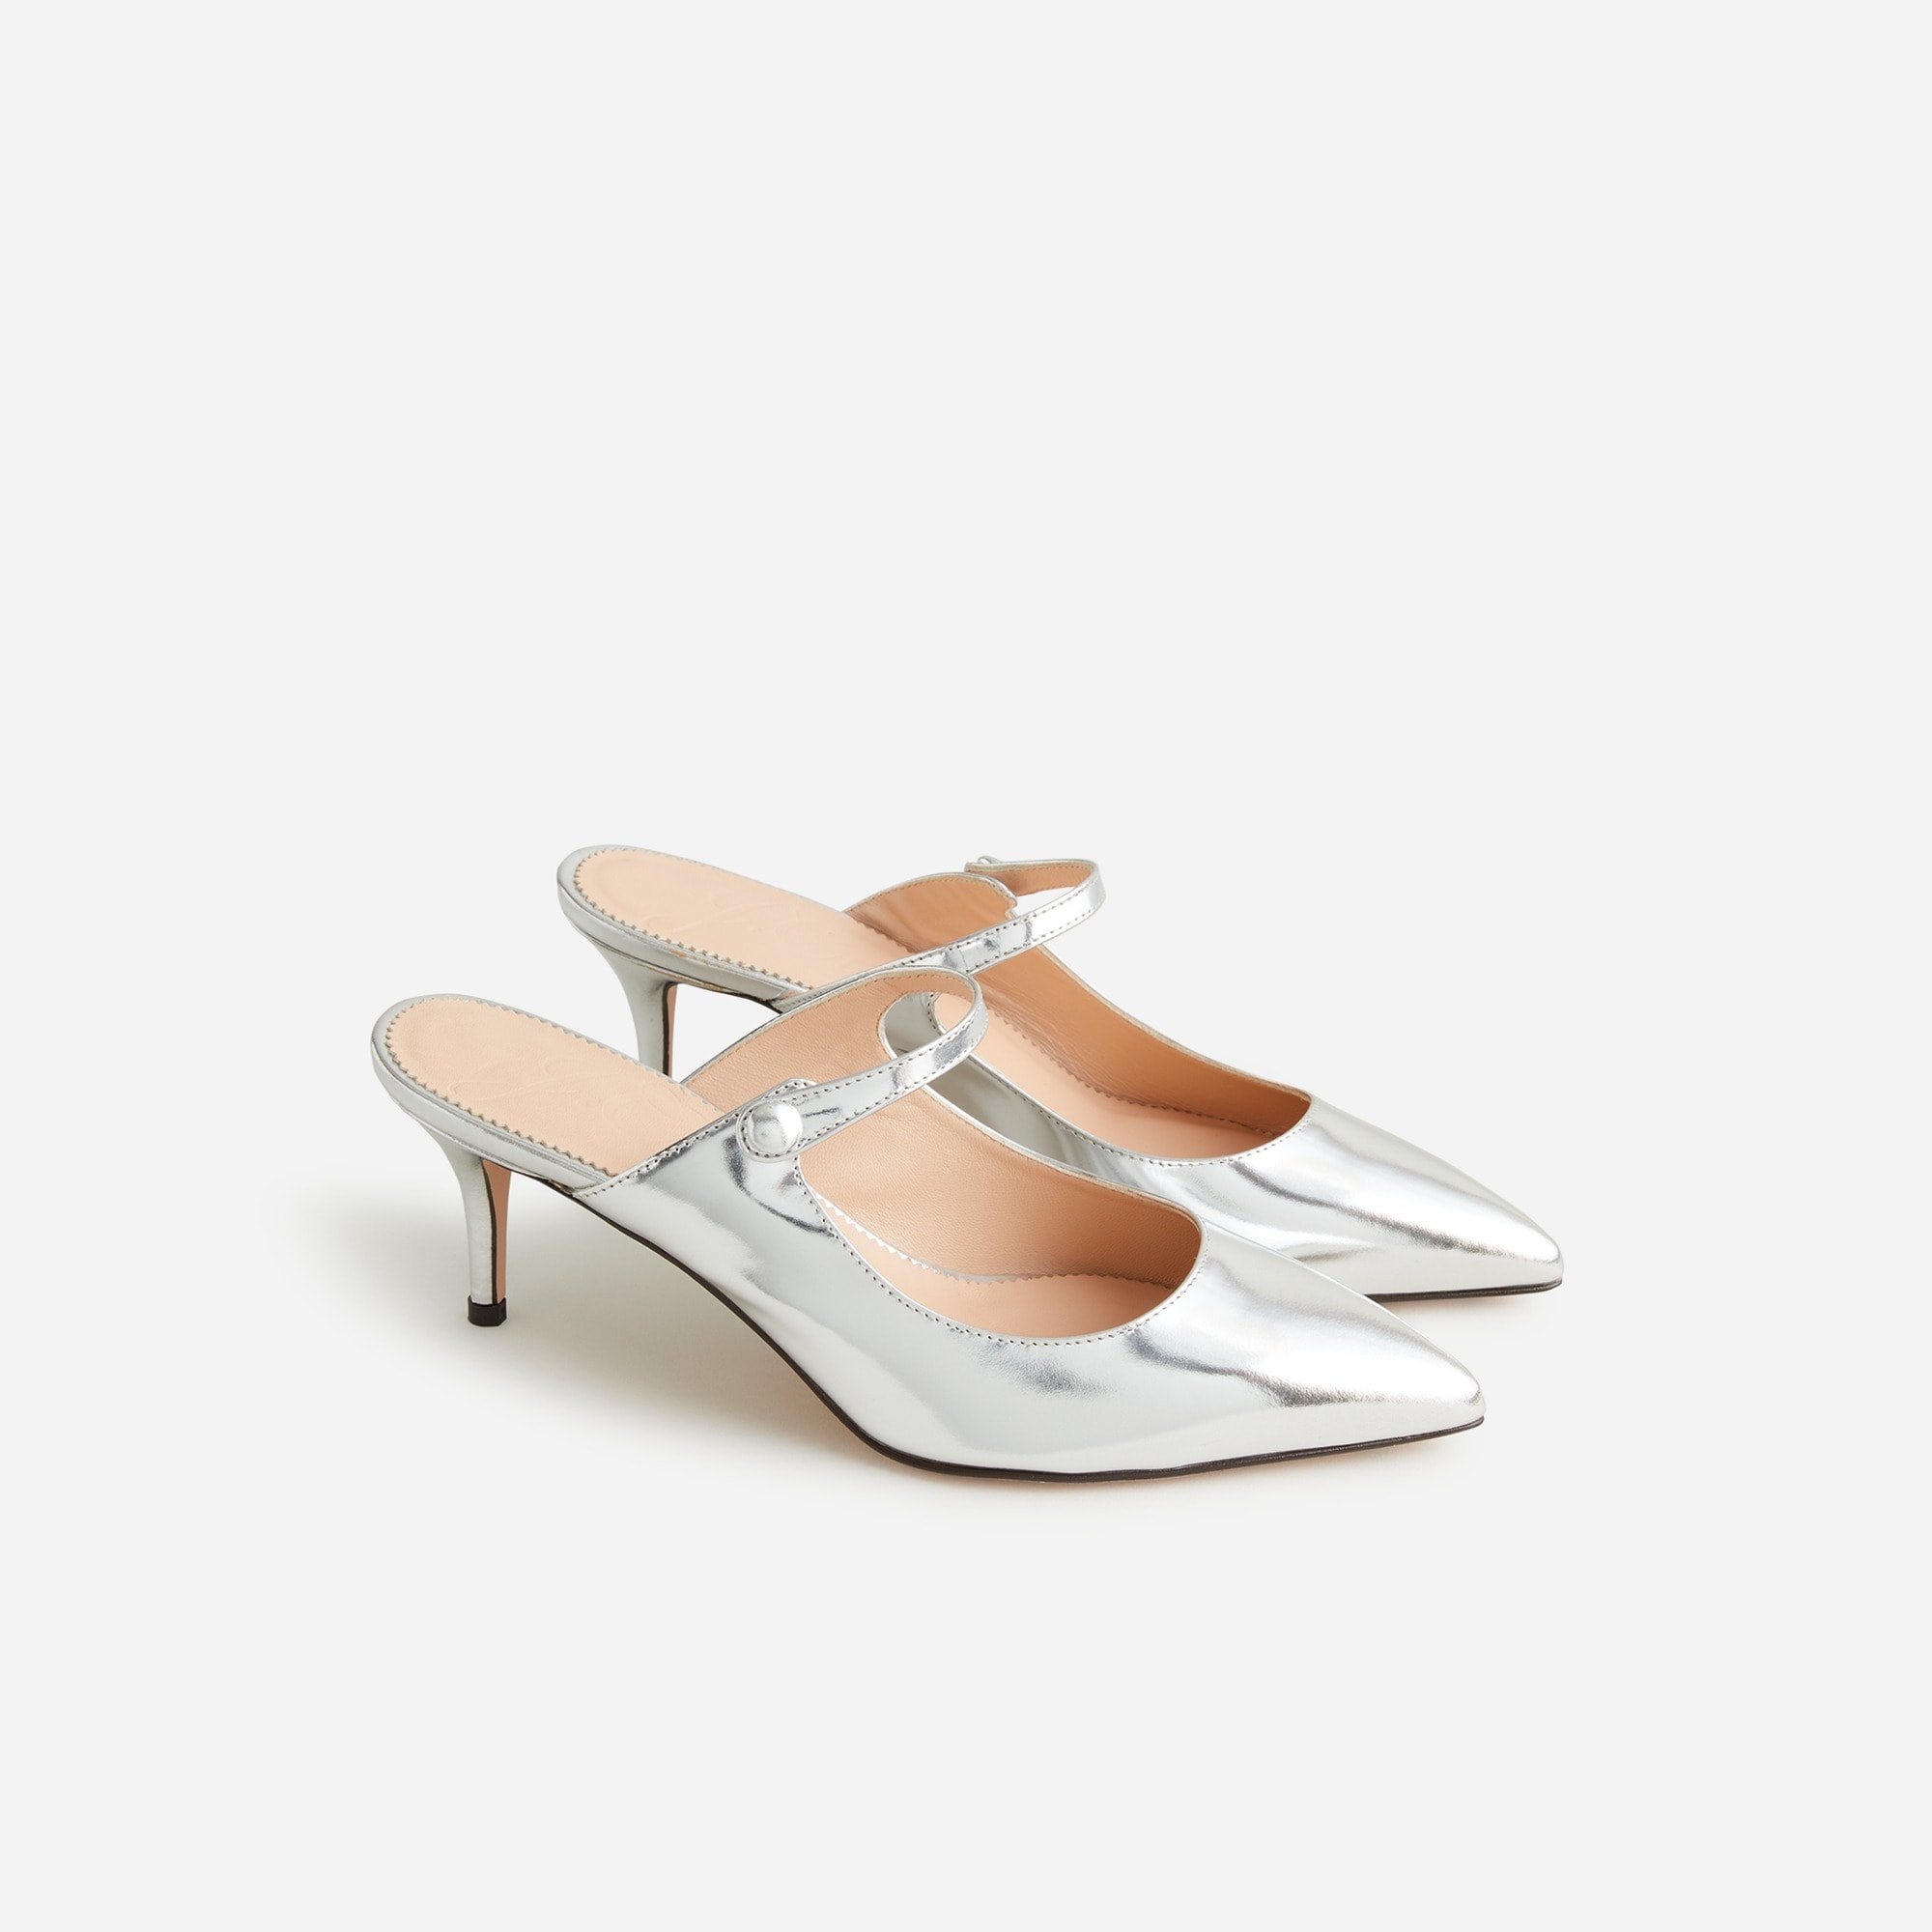  Colette mule heels in Italian specchio leather